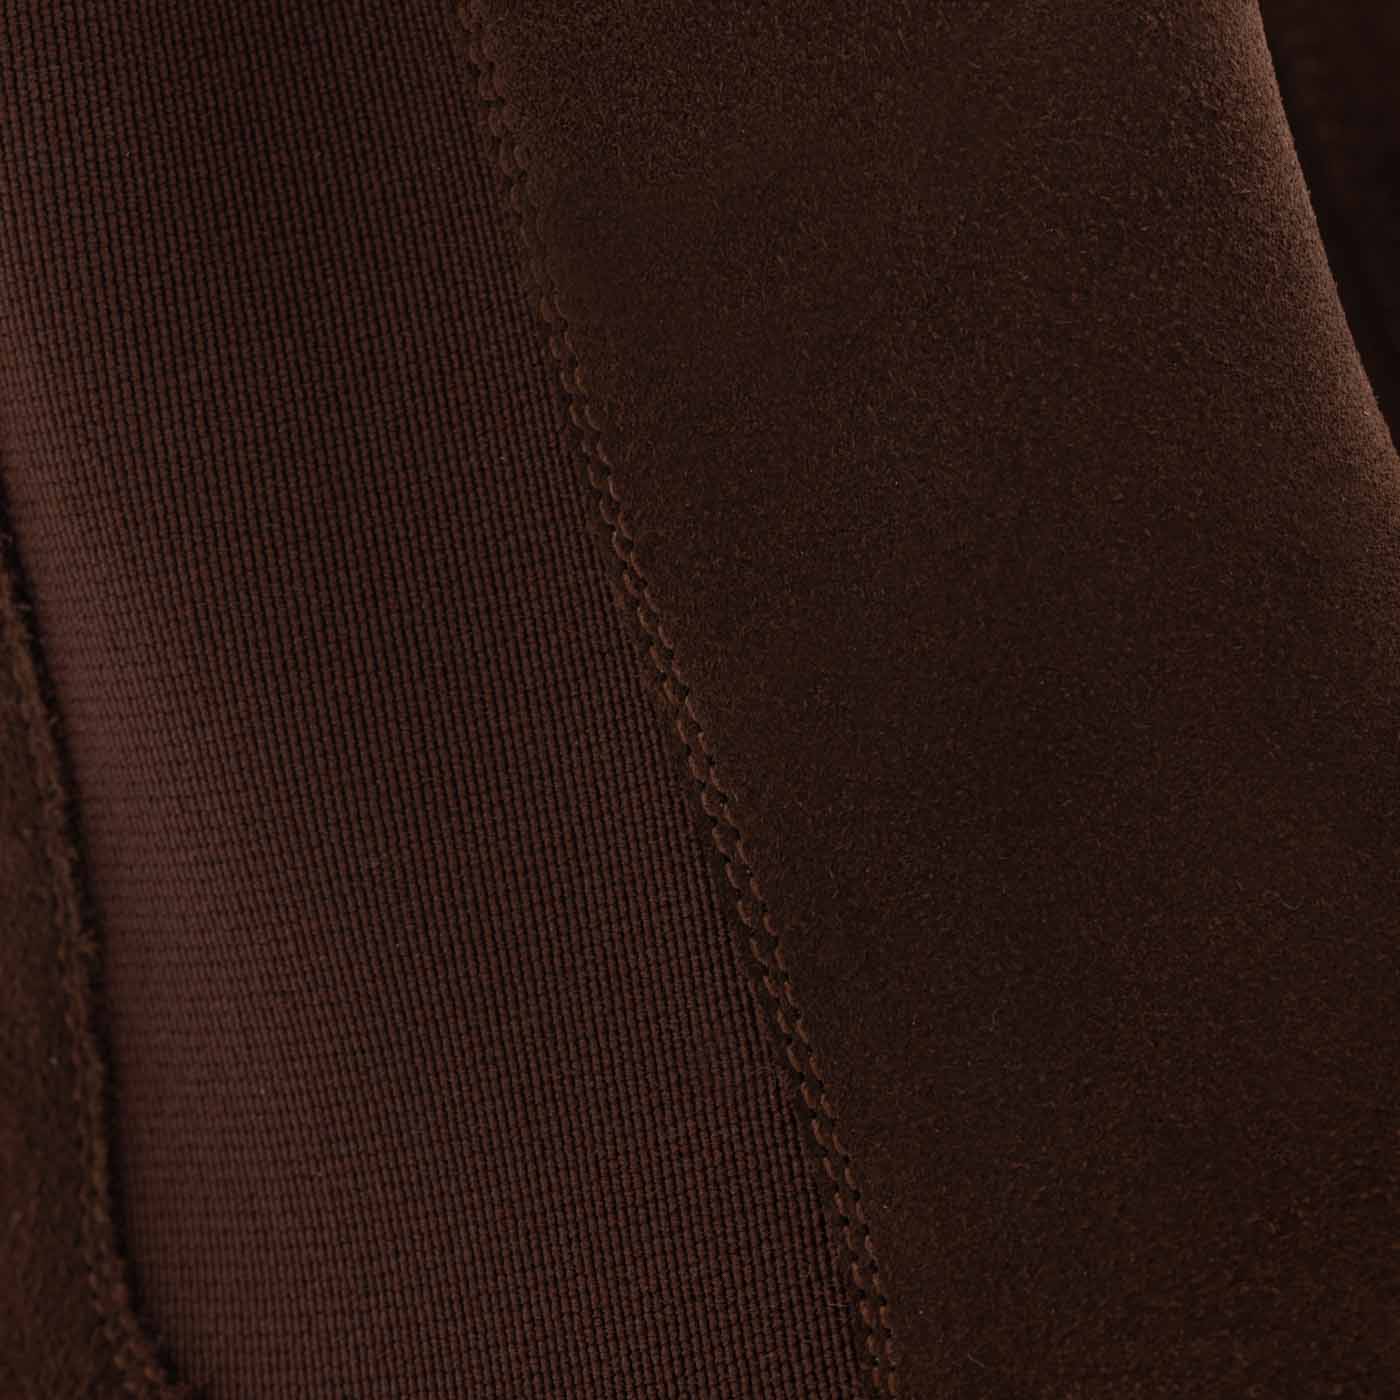 Women's plain wool tights - Brown Chocolate